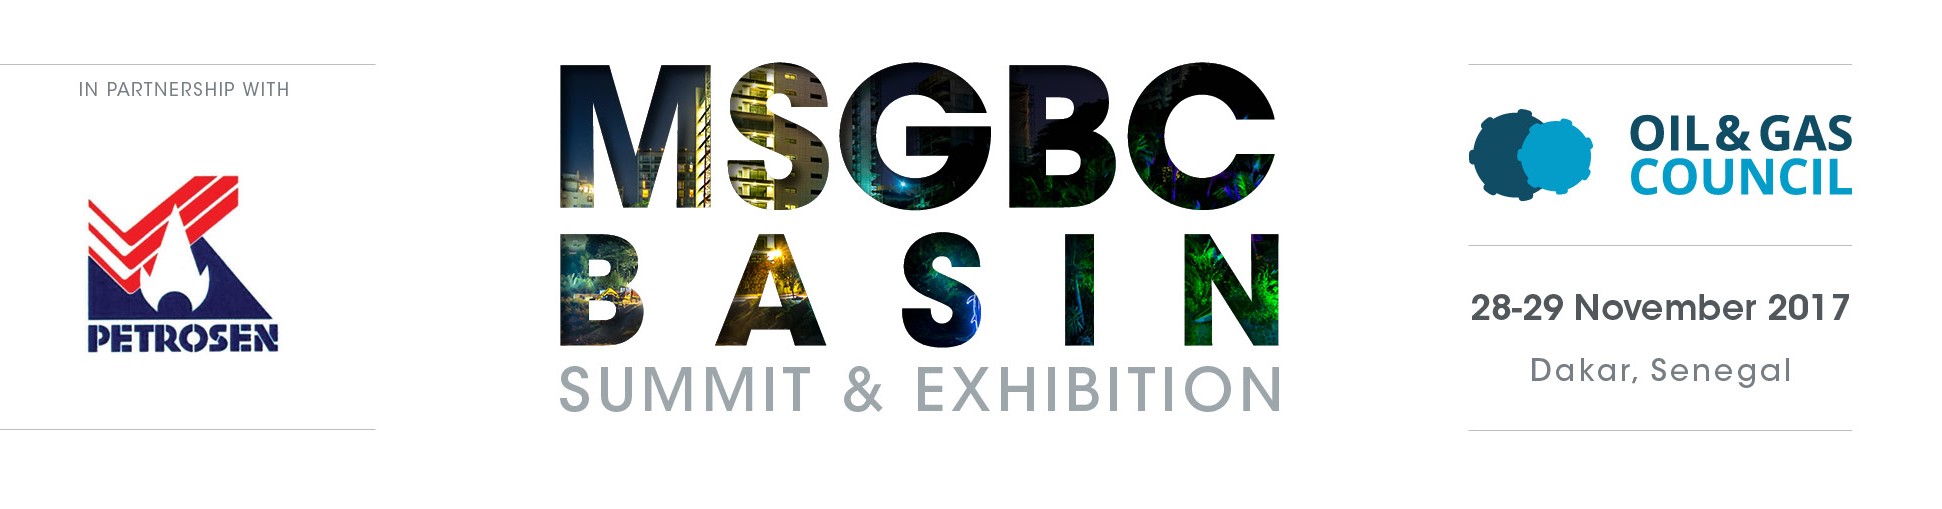 msgbc-basin-summit-&-exhibition-2017-1